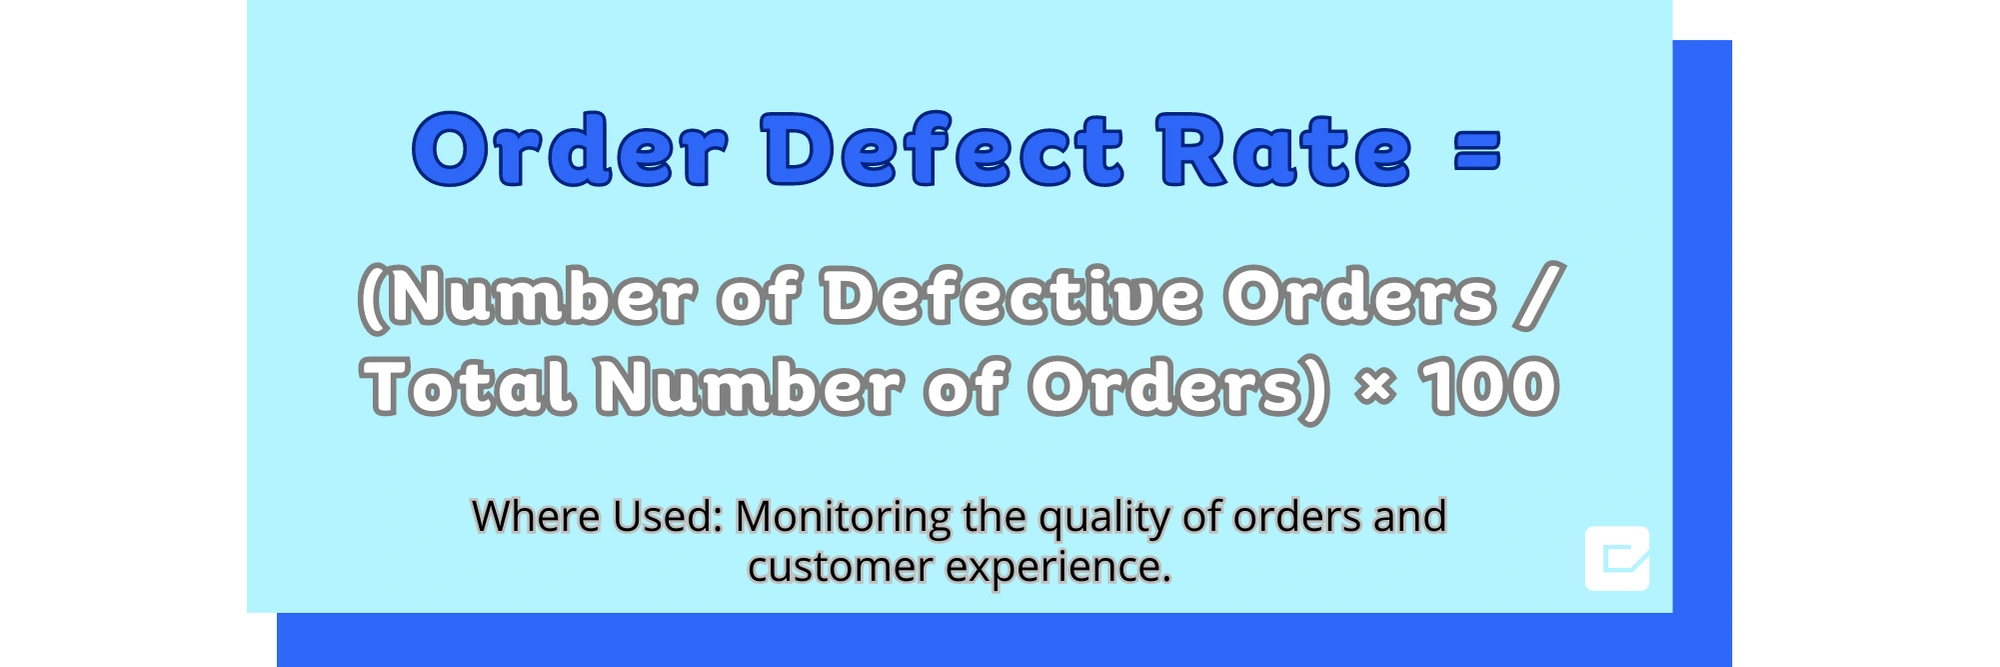 Order Defect Rate in Amazon KPI metrics